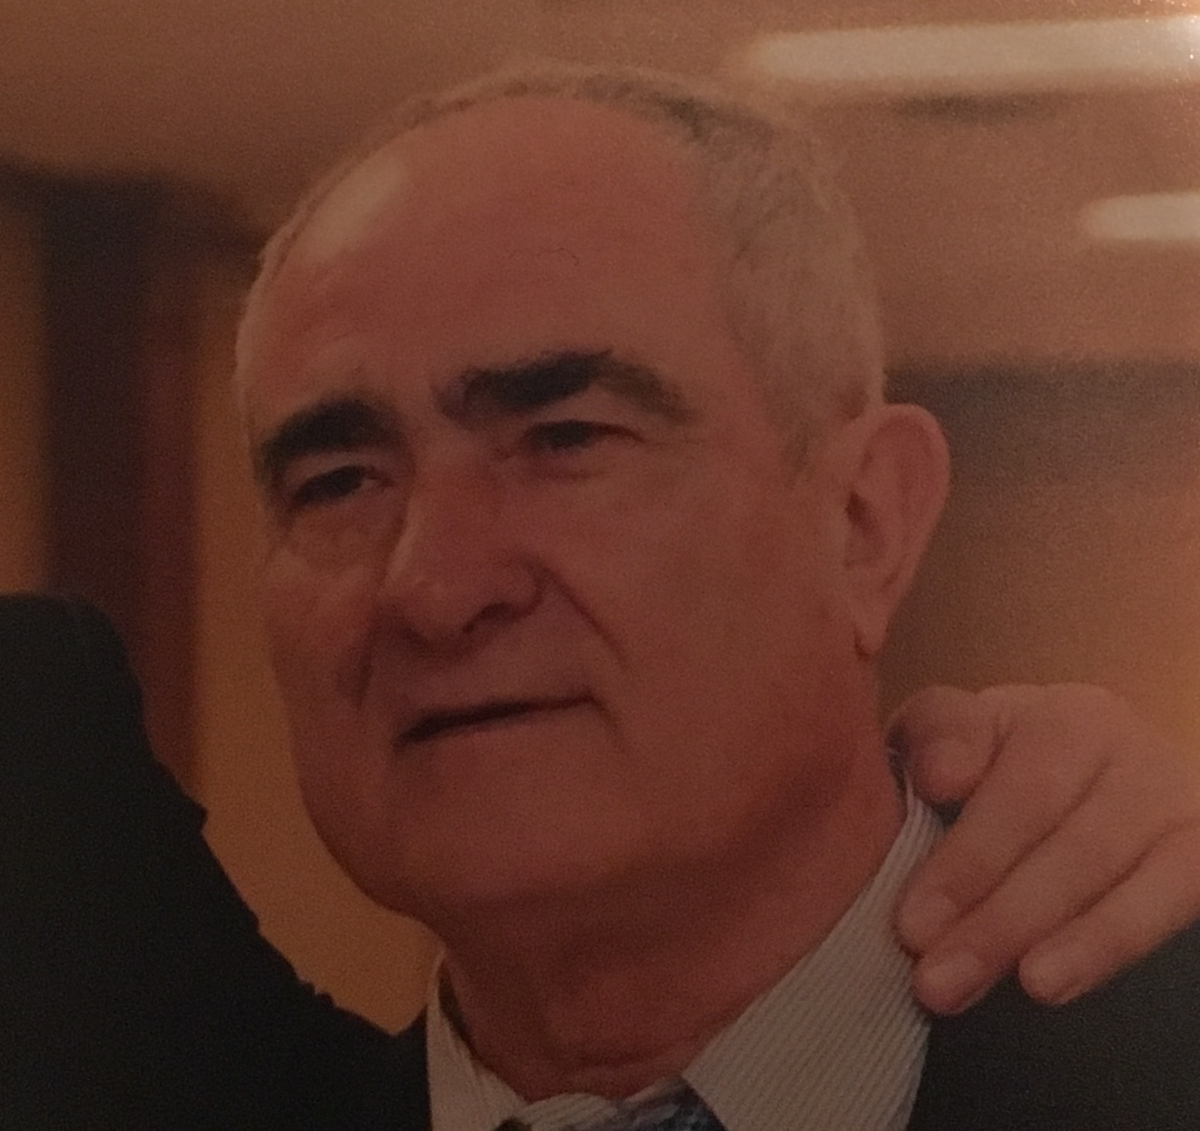 Vasilios "Bill" Konidas was last seen at University Hospital in London, Ont. on July 19, 2017.